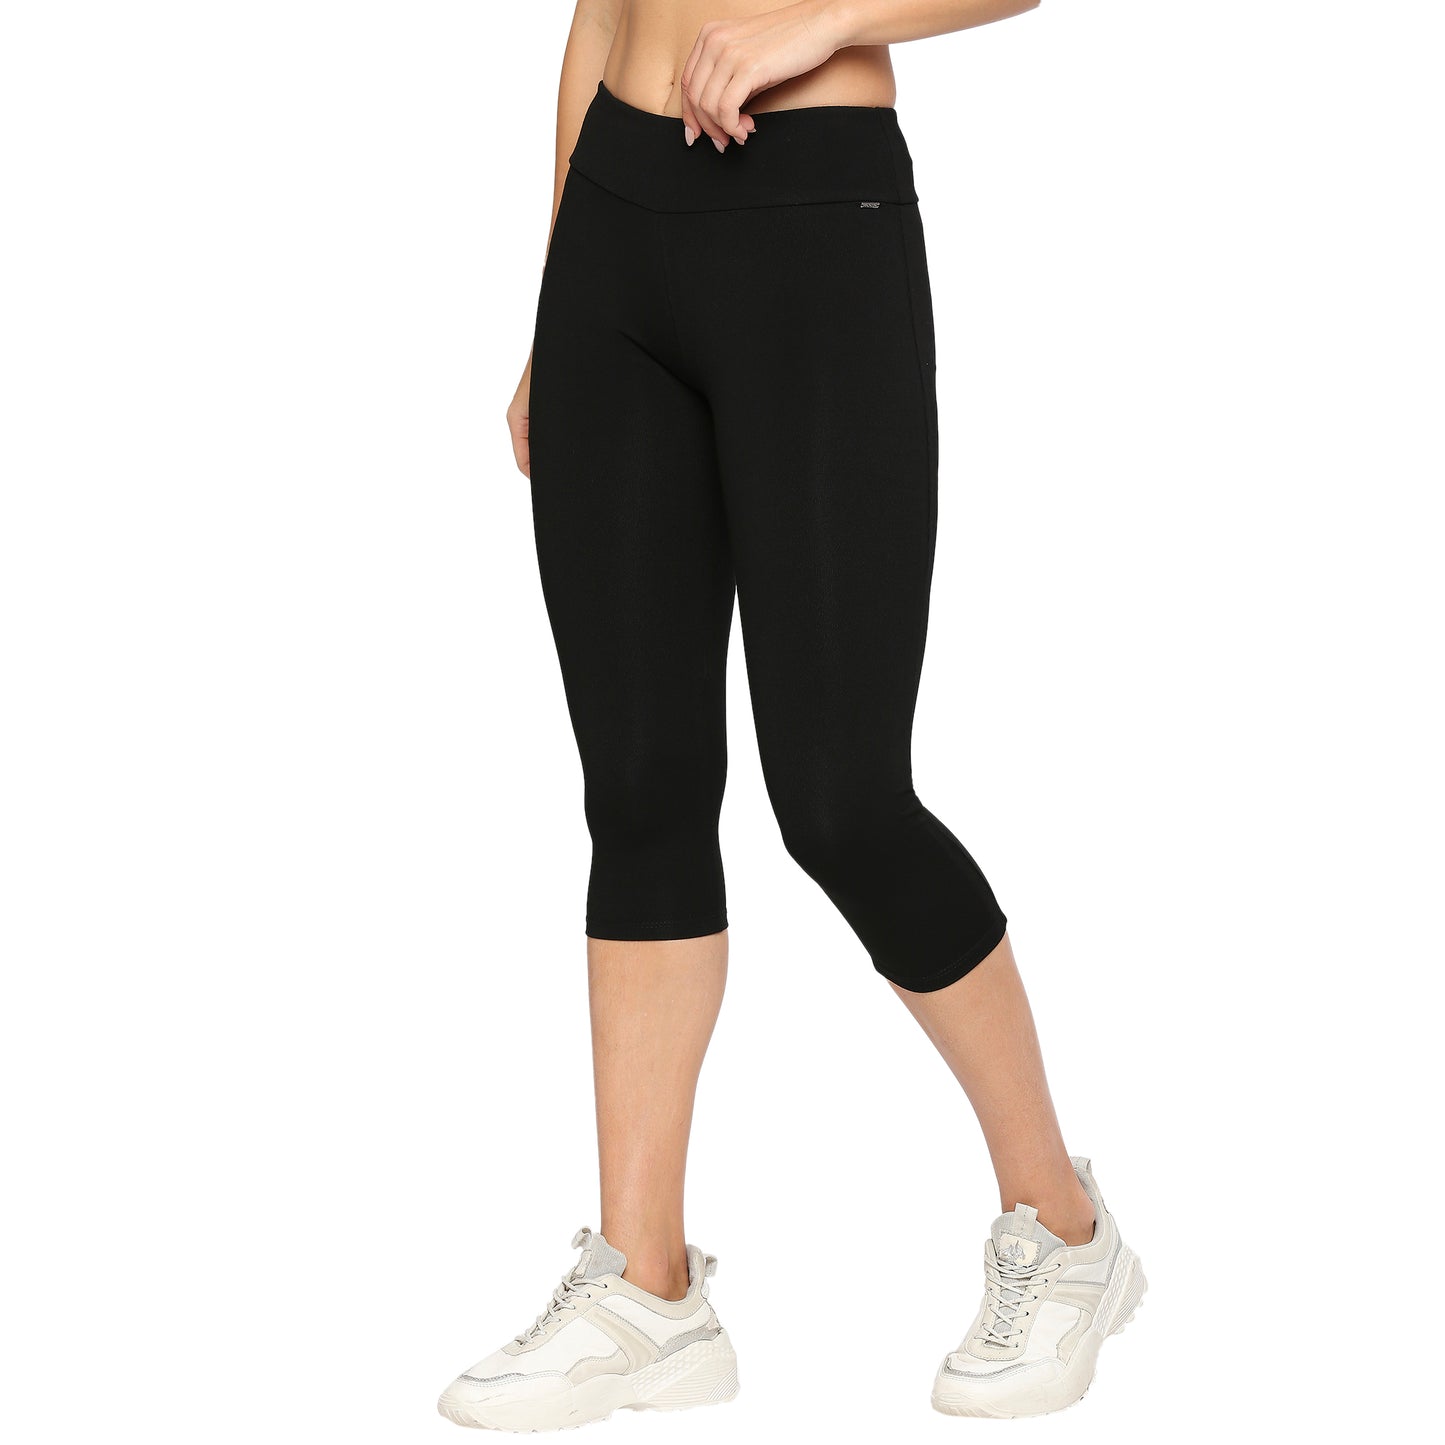 Apana Yoga Lifestyle Polyester Spandex Active Stetch Capri Black Pants  WOMEN'S S 739754631832 on eBid Canada